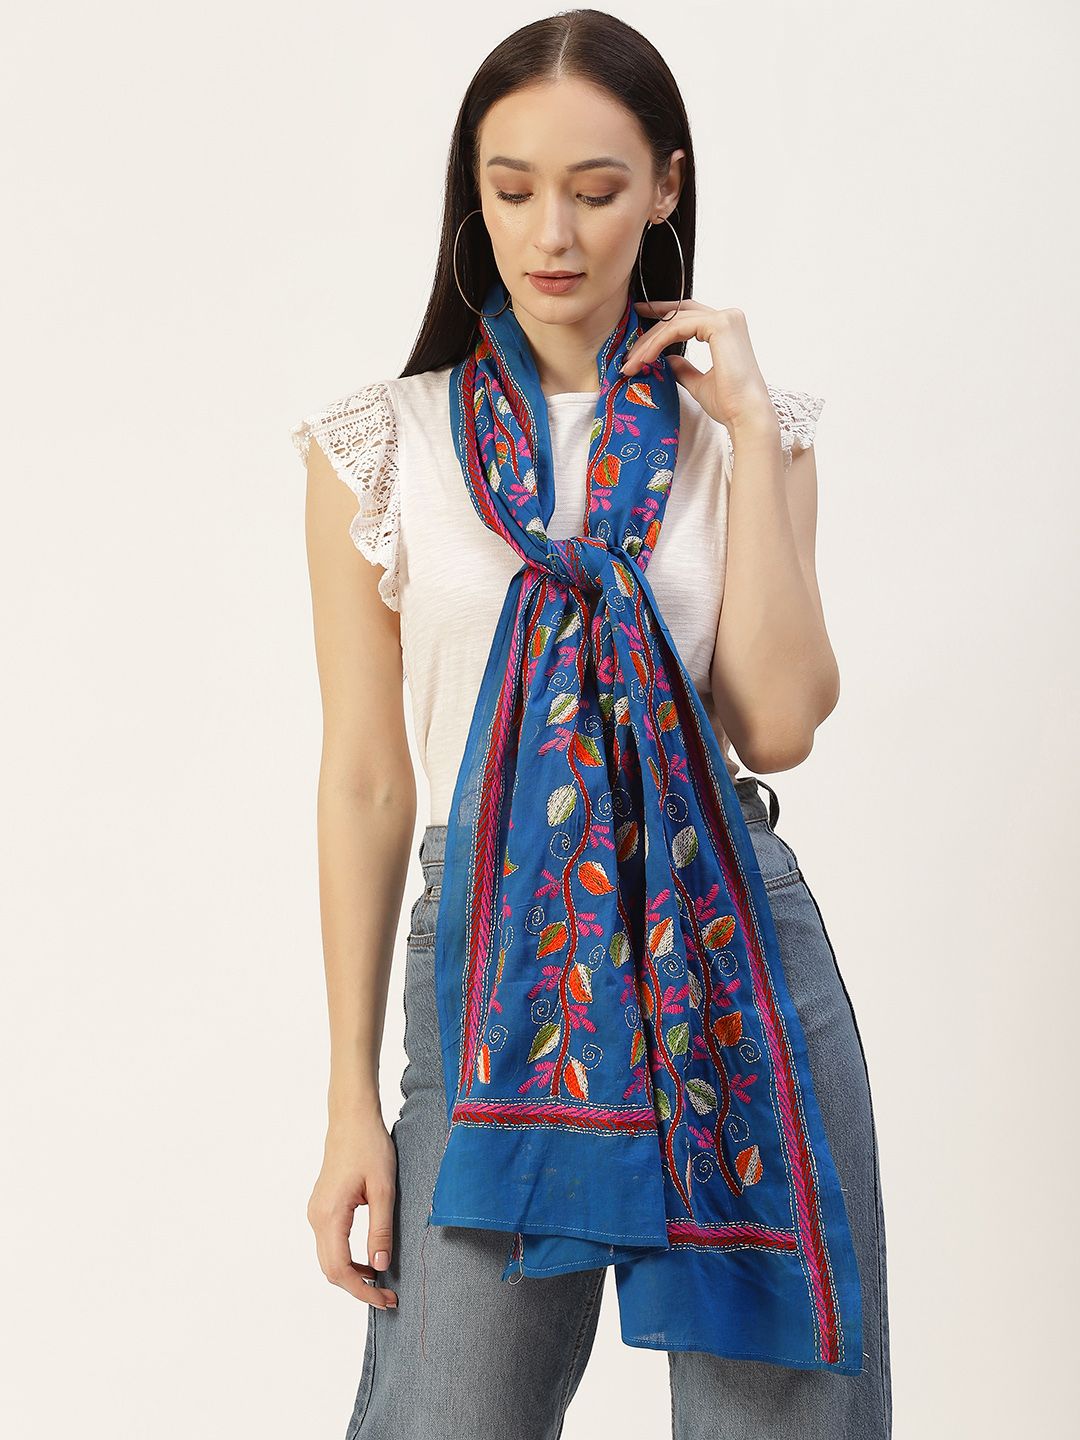 ArtEastri Women Blue & Orange Embroidered Cotton Kantha Stole Price in India